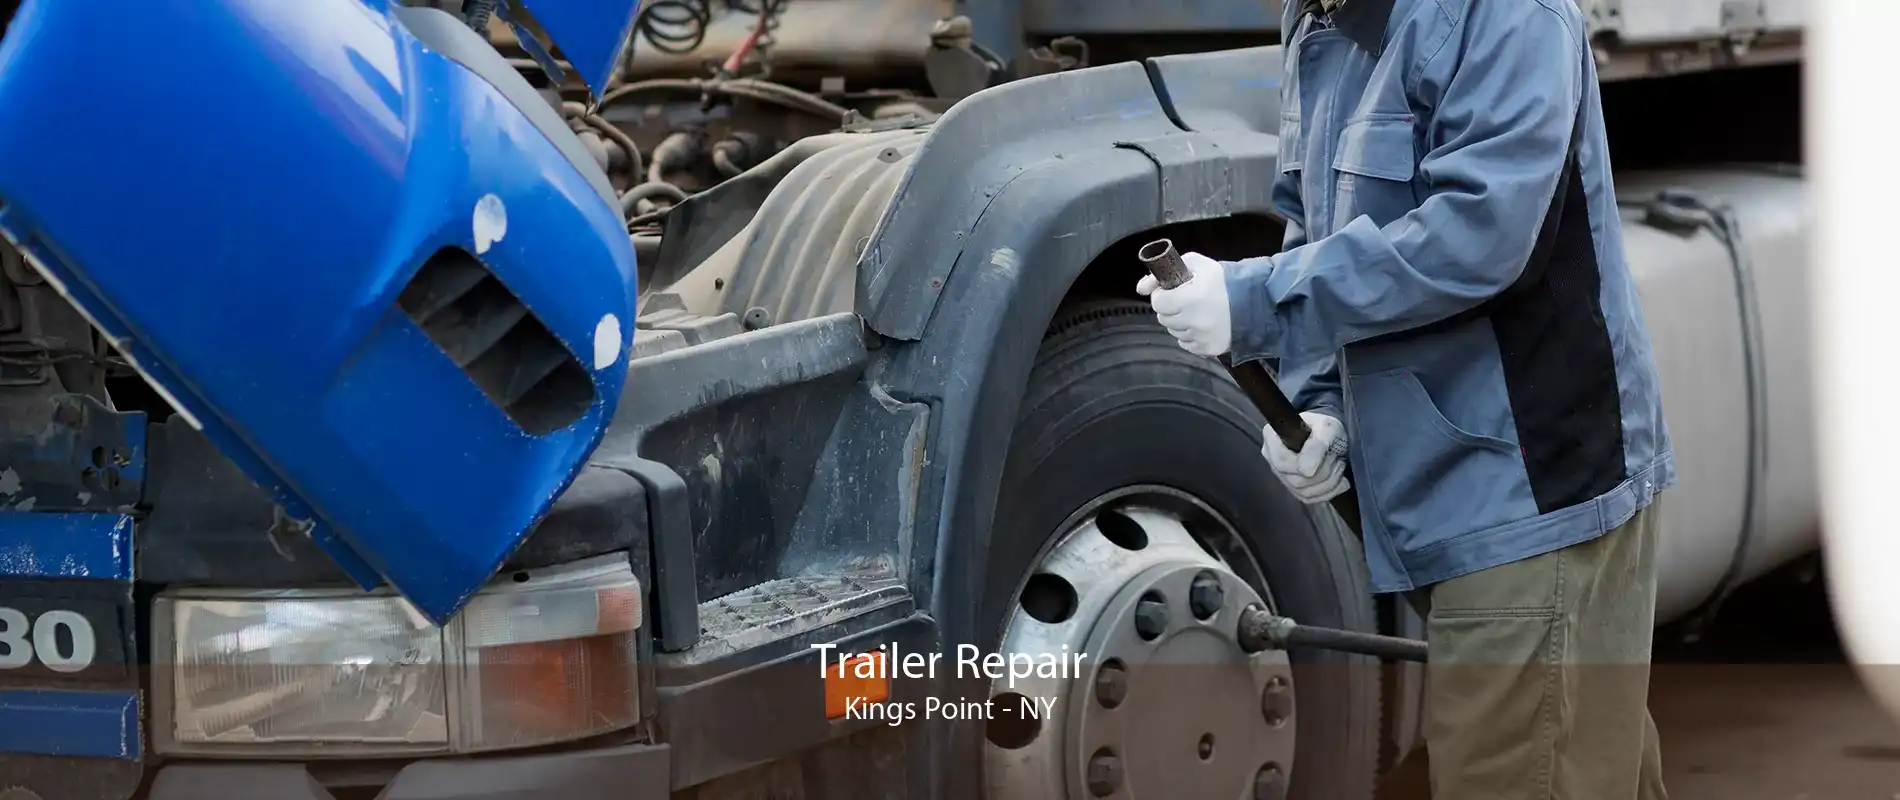 Trailer Repair Kings Point - NY